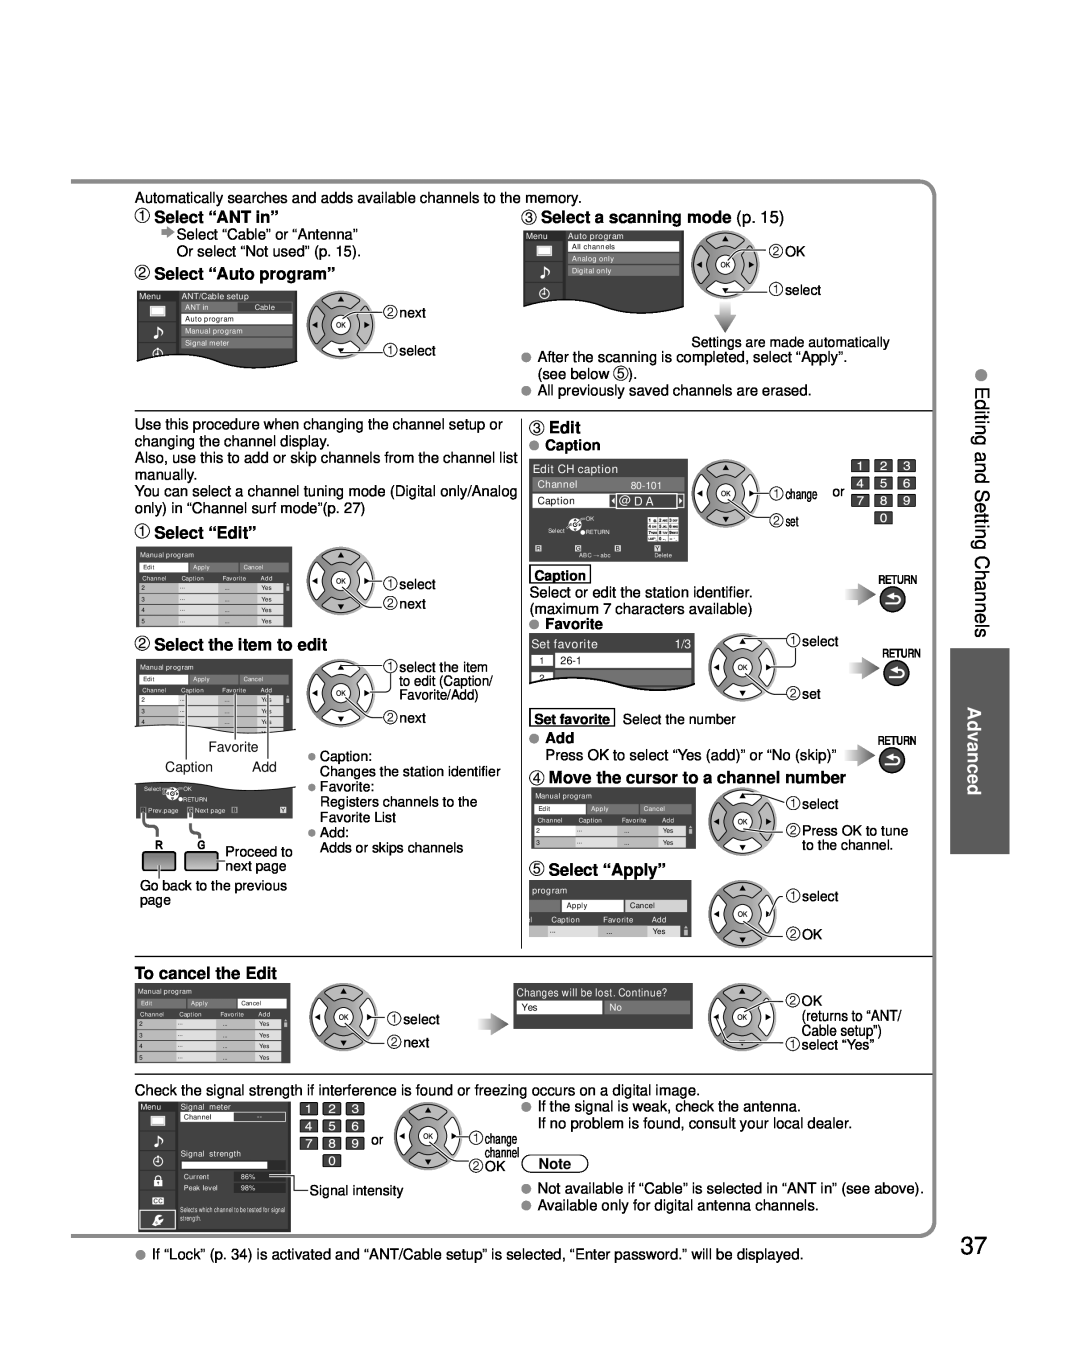 Panasonic TC-P50U2 Select “ANT in”, Select “Auto program”, Select a scanning mode p, Select “Edit”, Select “Apply” 